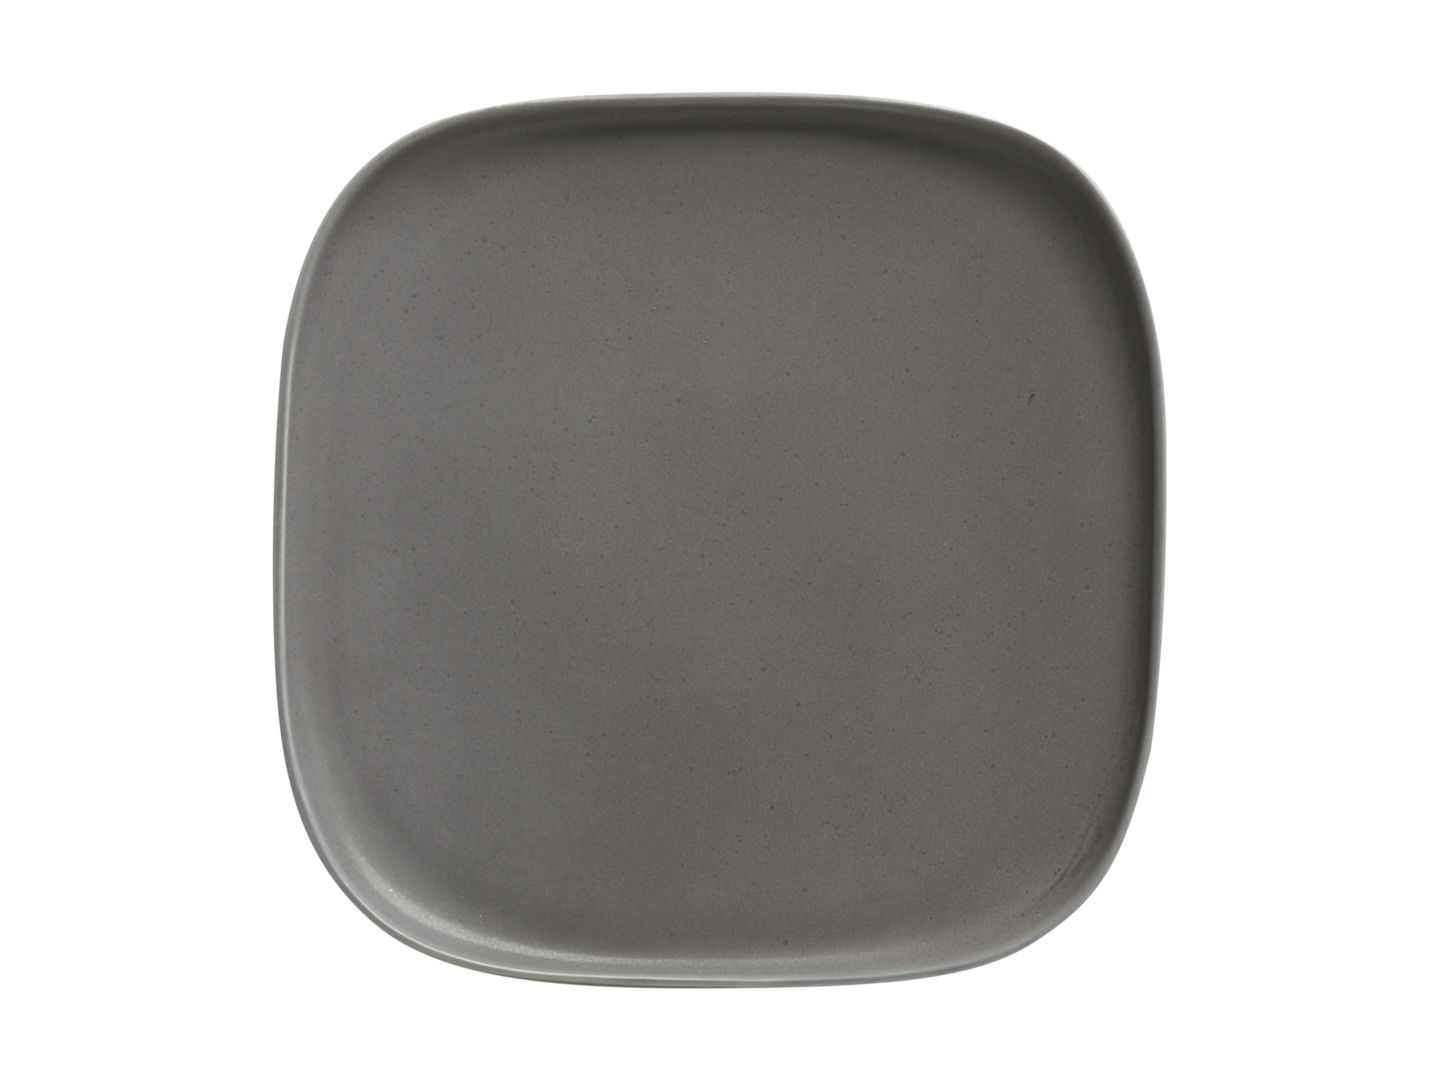 Čtvercový mělký talíř Elemental 20,5 x 20,5 cm Charcoal - Maxwell&Williams